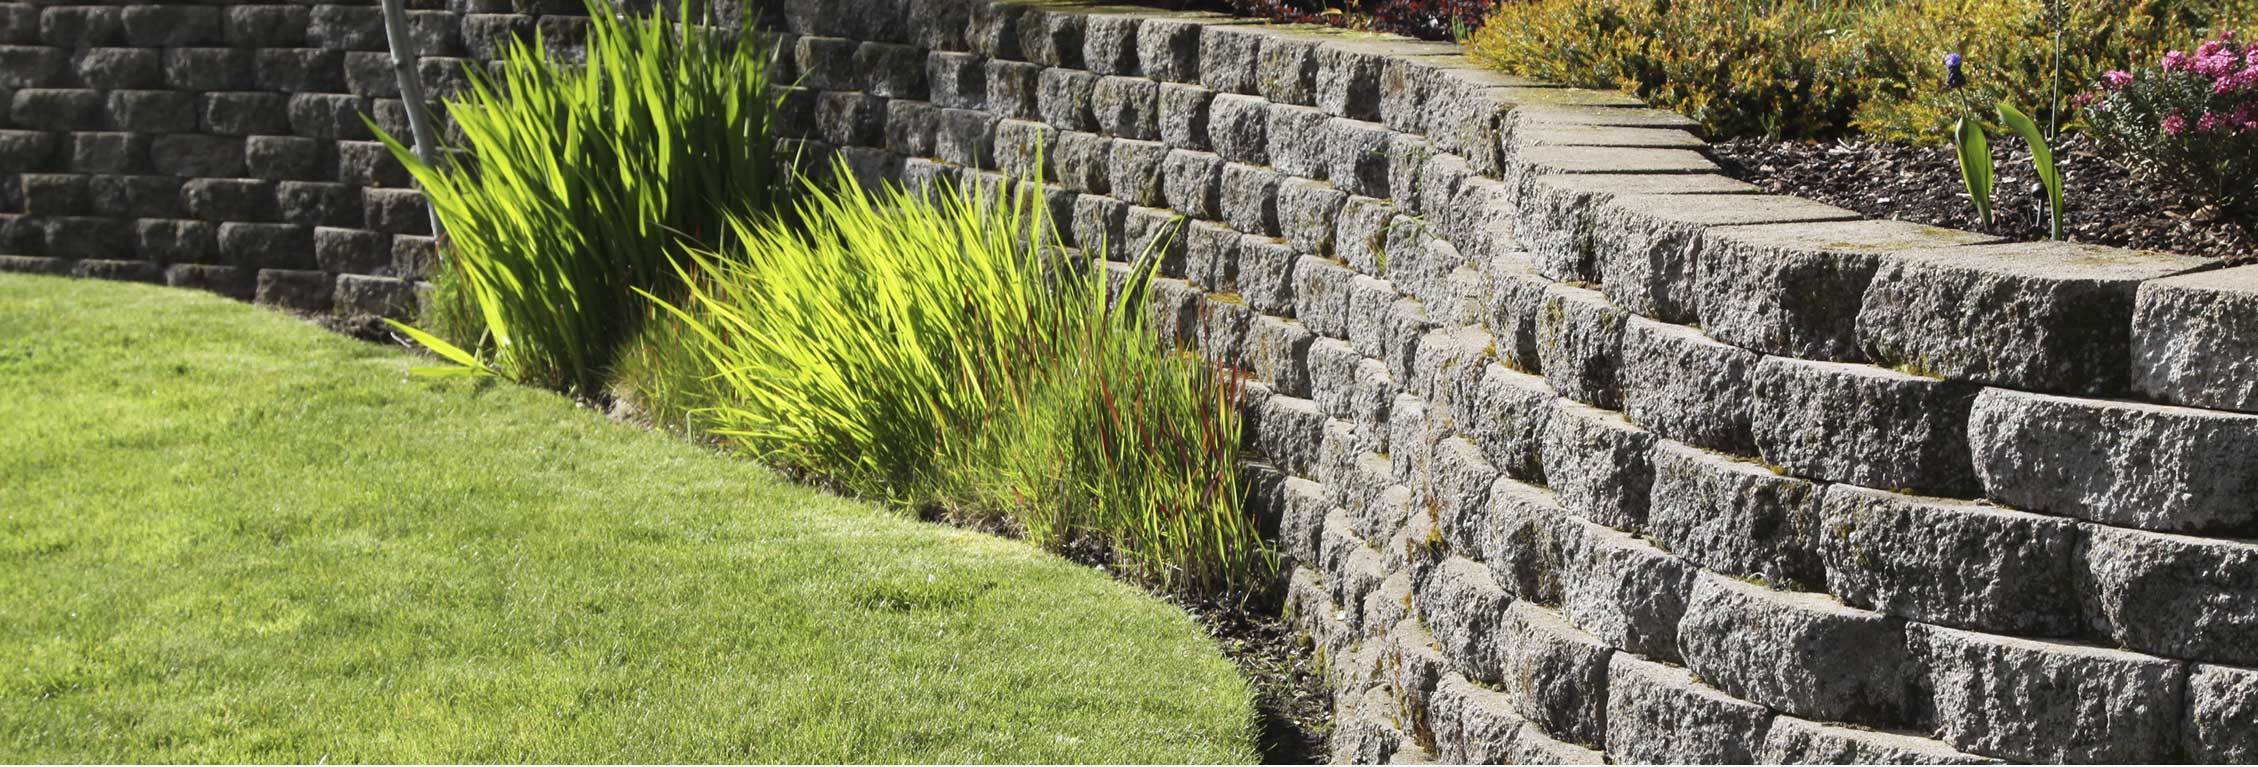 Types of retaining Walls - stone retaining walls | DFW Foundation Repair IO